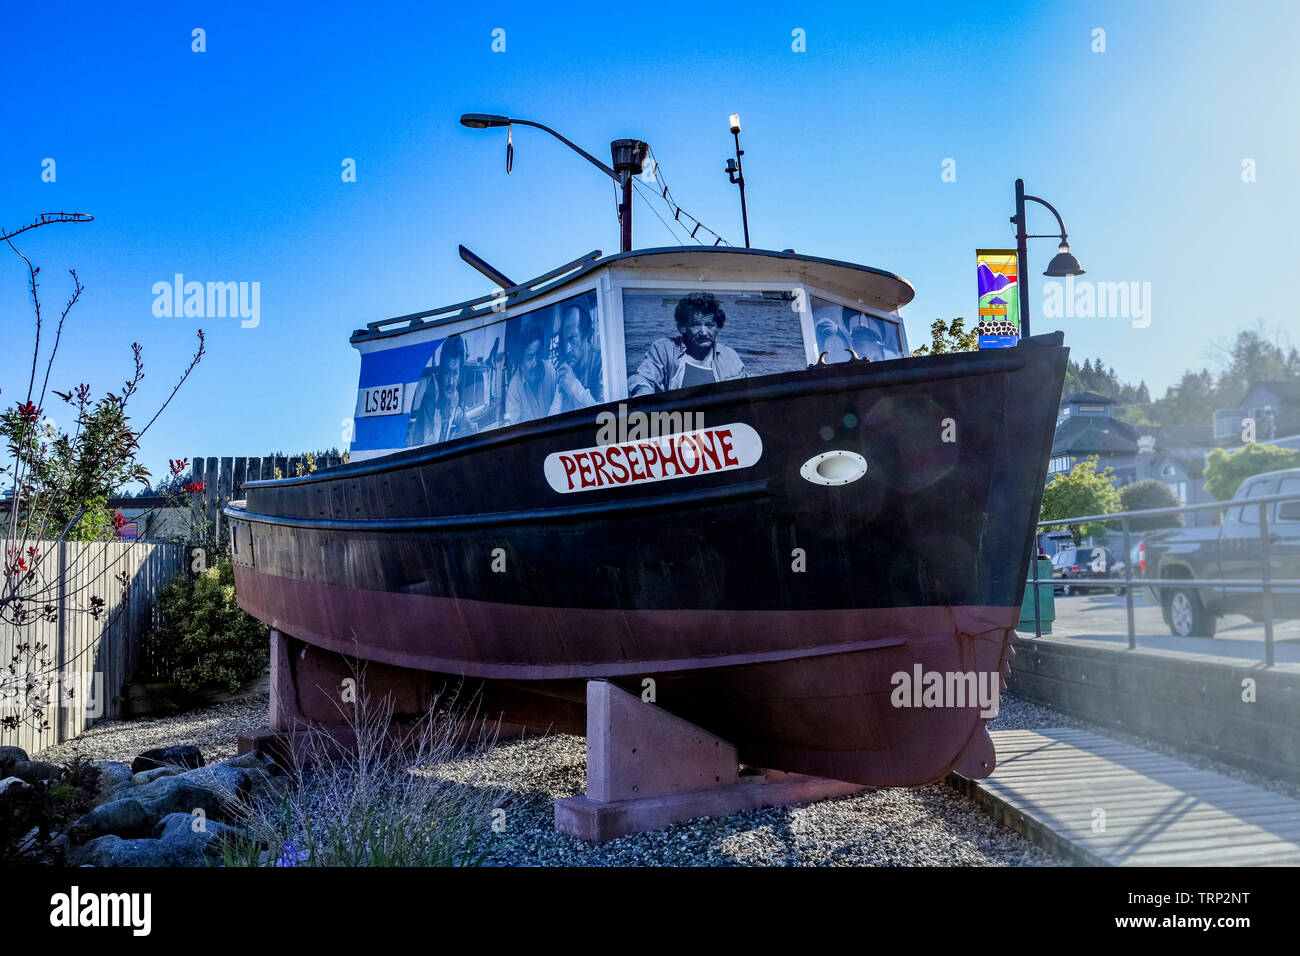 Persephone, salvage boat from CBC tv series The Beachcombers, Gibsons, Sunshine Coast, British Columbia, Canada Stock Photo